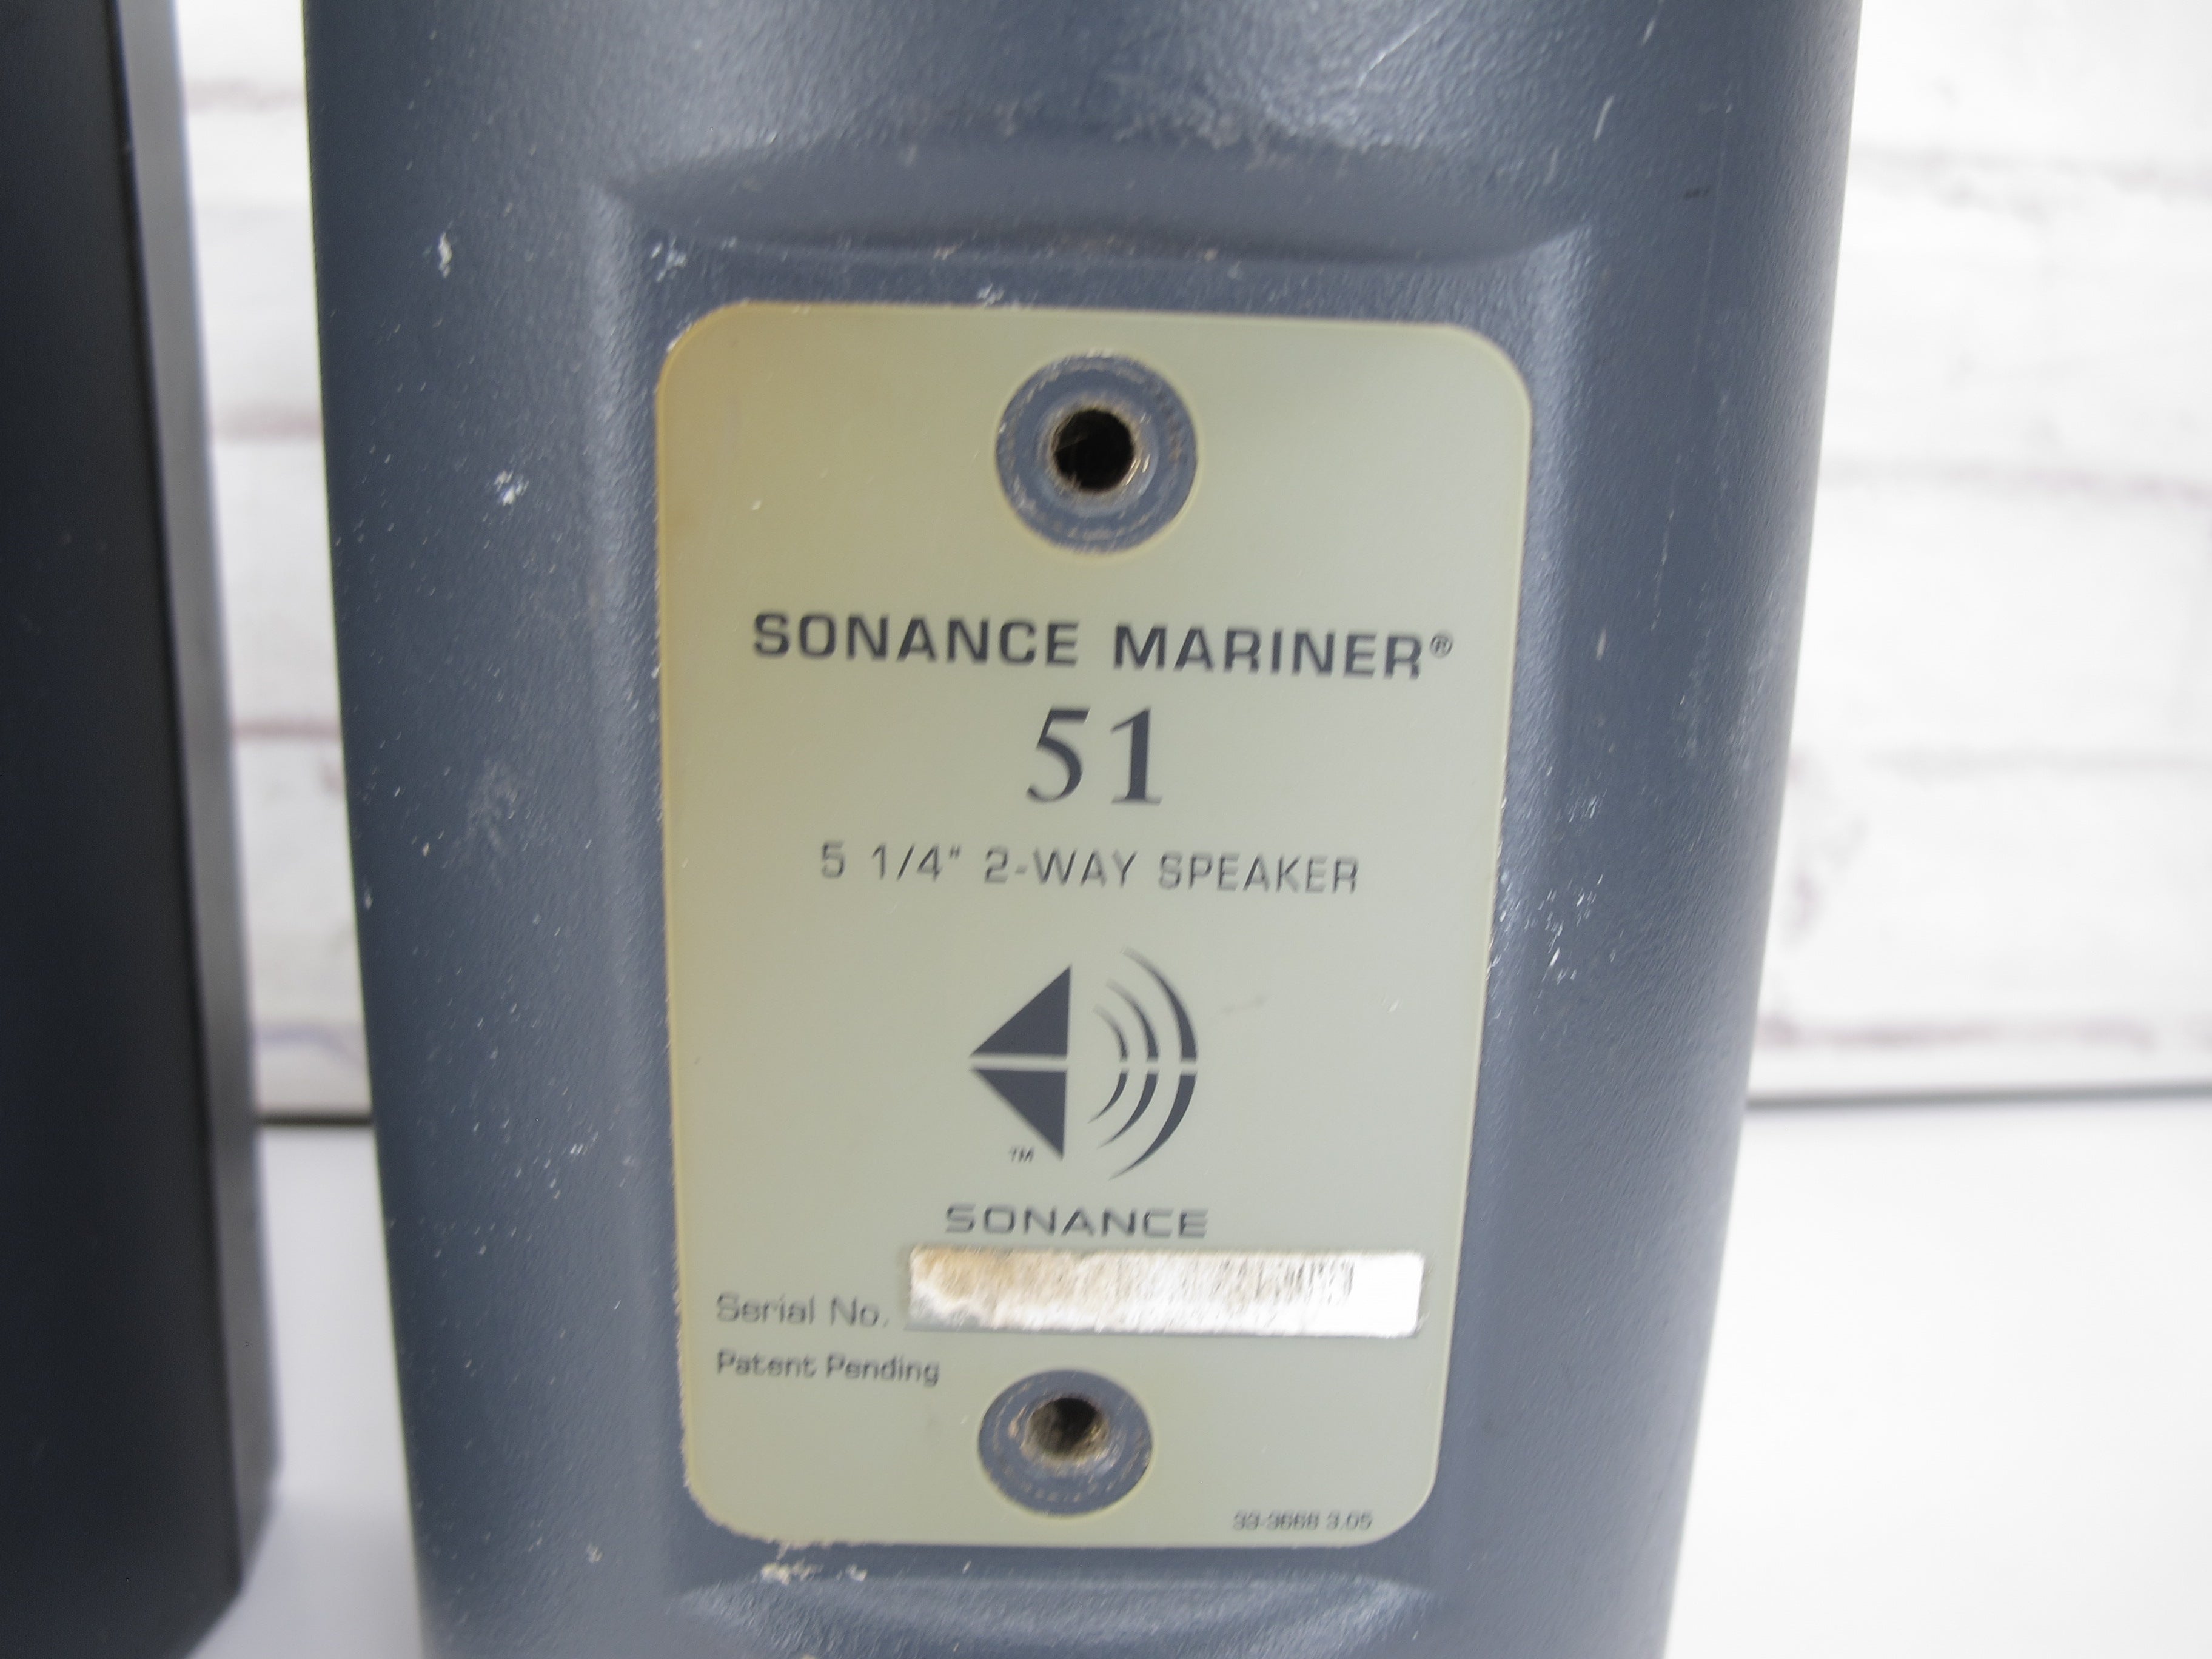 Sonance Mariner 51 5-1/4